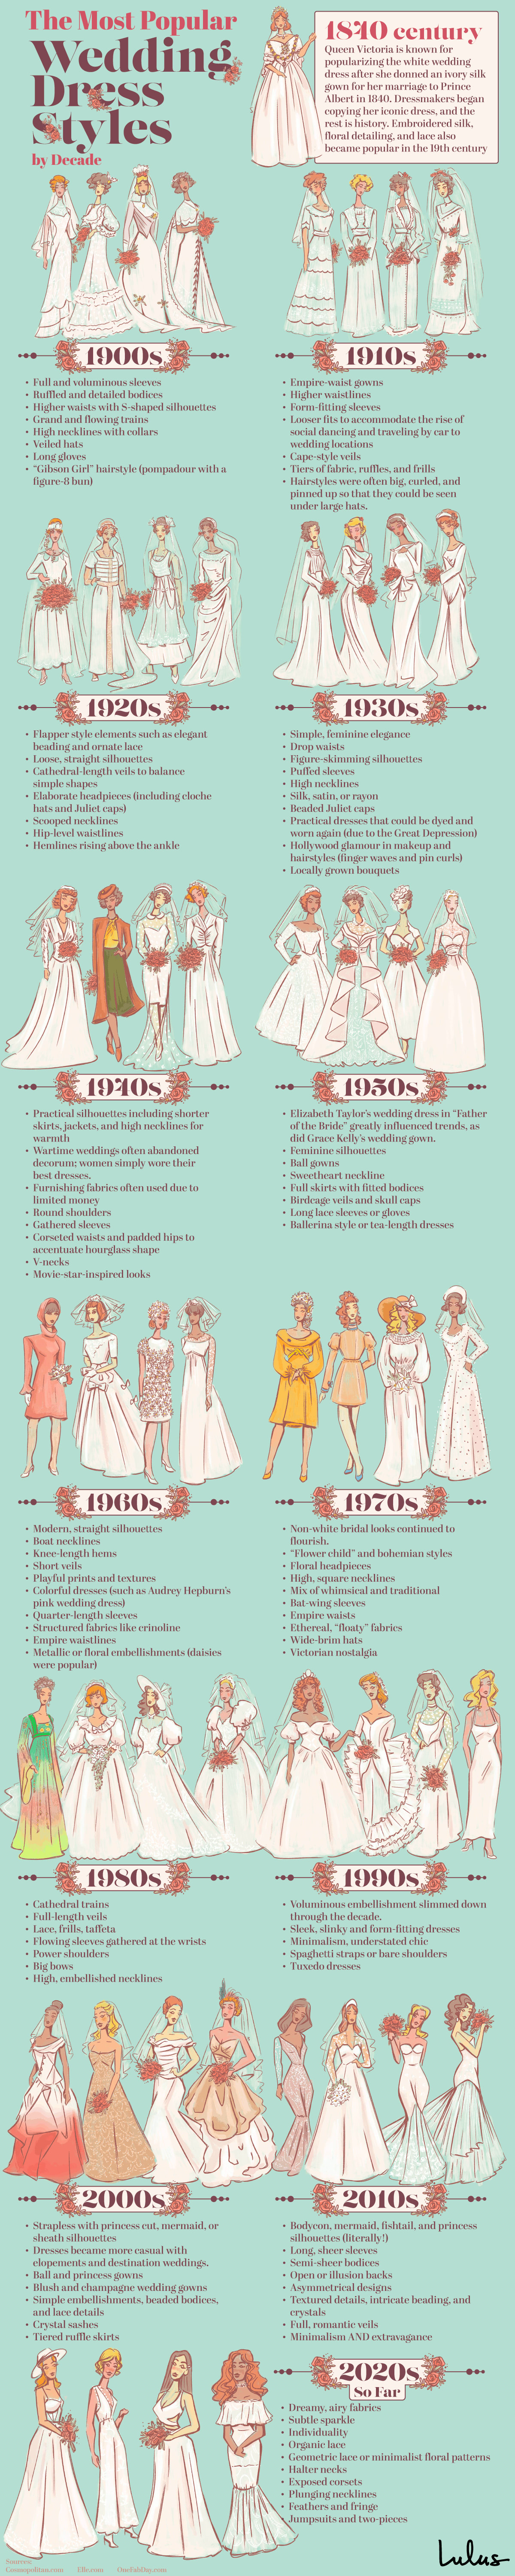 most popular wedding dress styles by decade